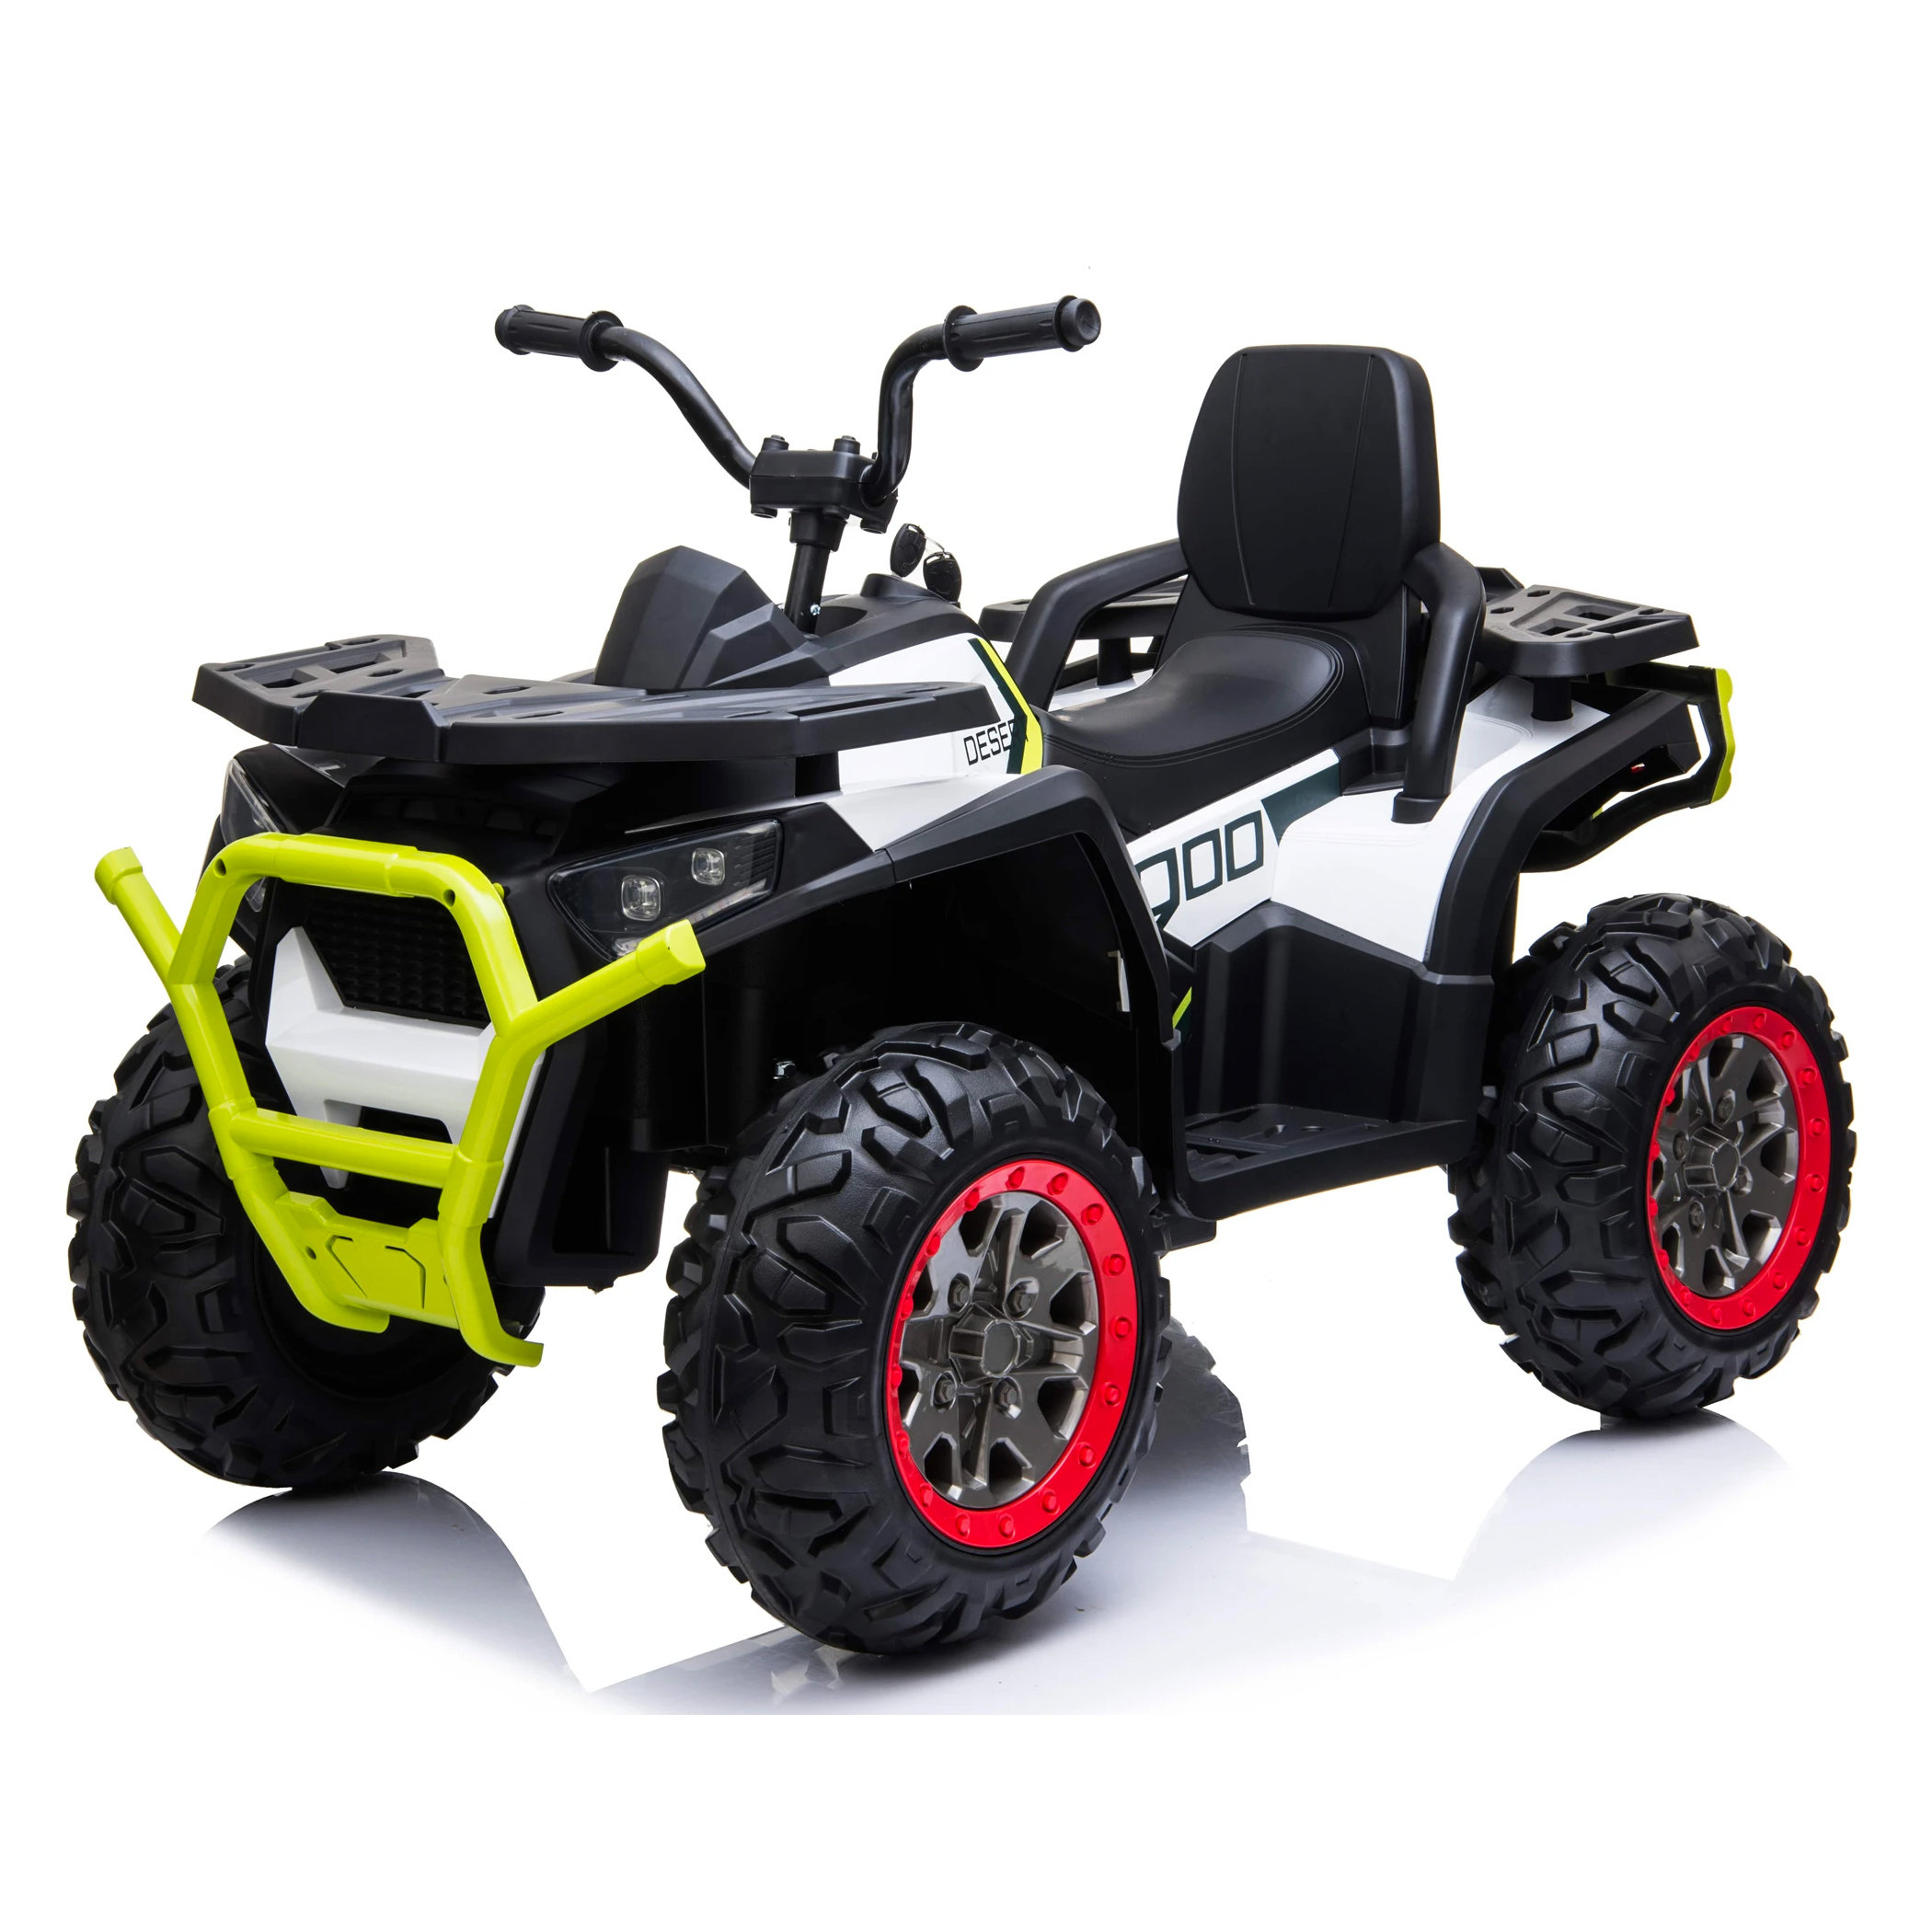 Green 12v 2 Motors Kids Ride on ATV Car Quad Electric Cars Gift Toy 4 Wheels for sale online 